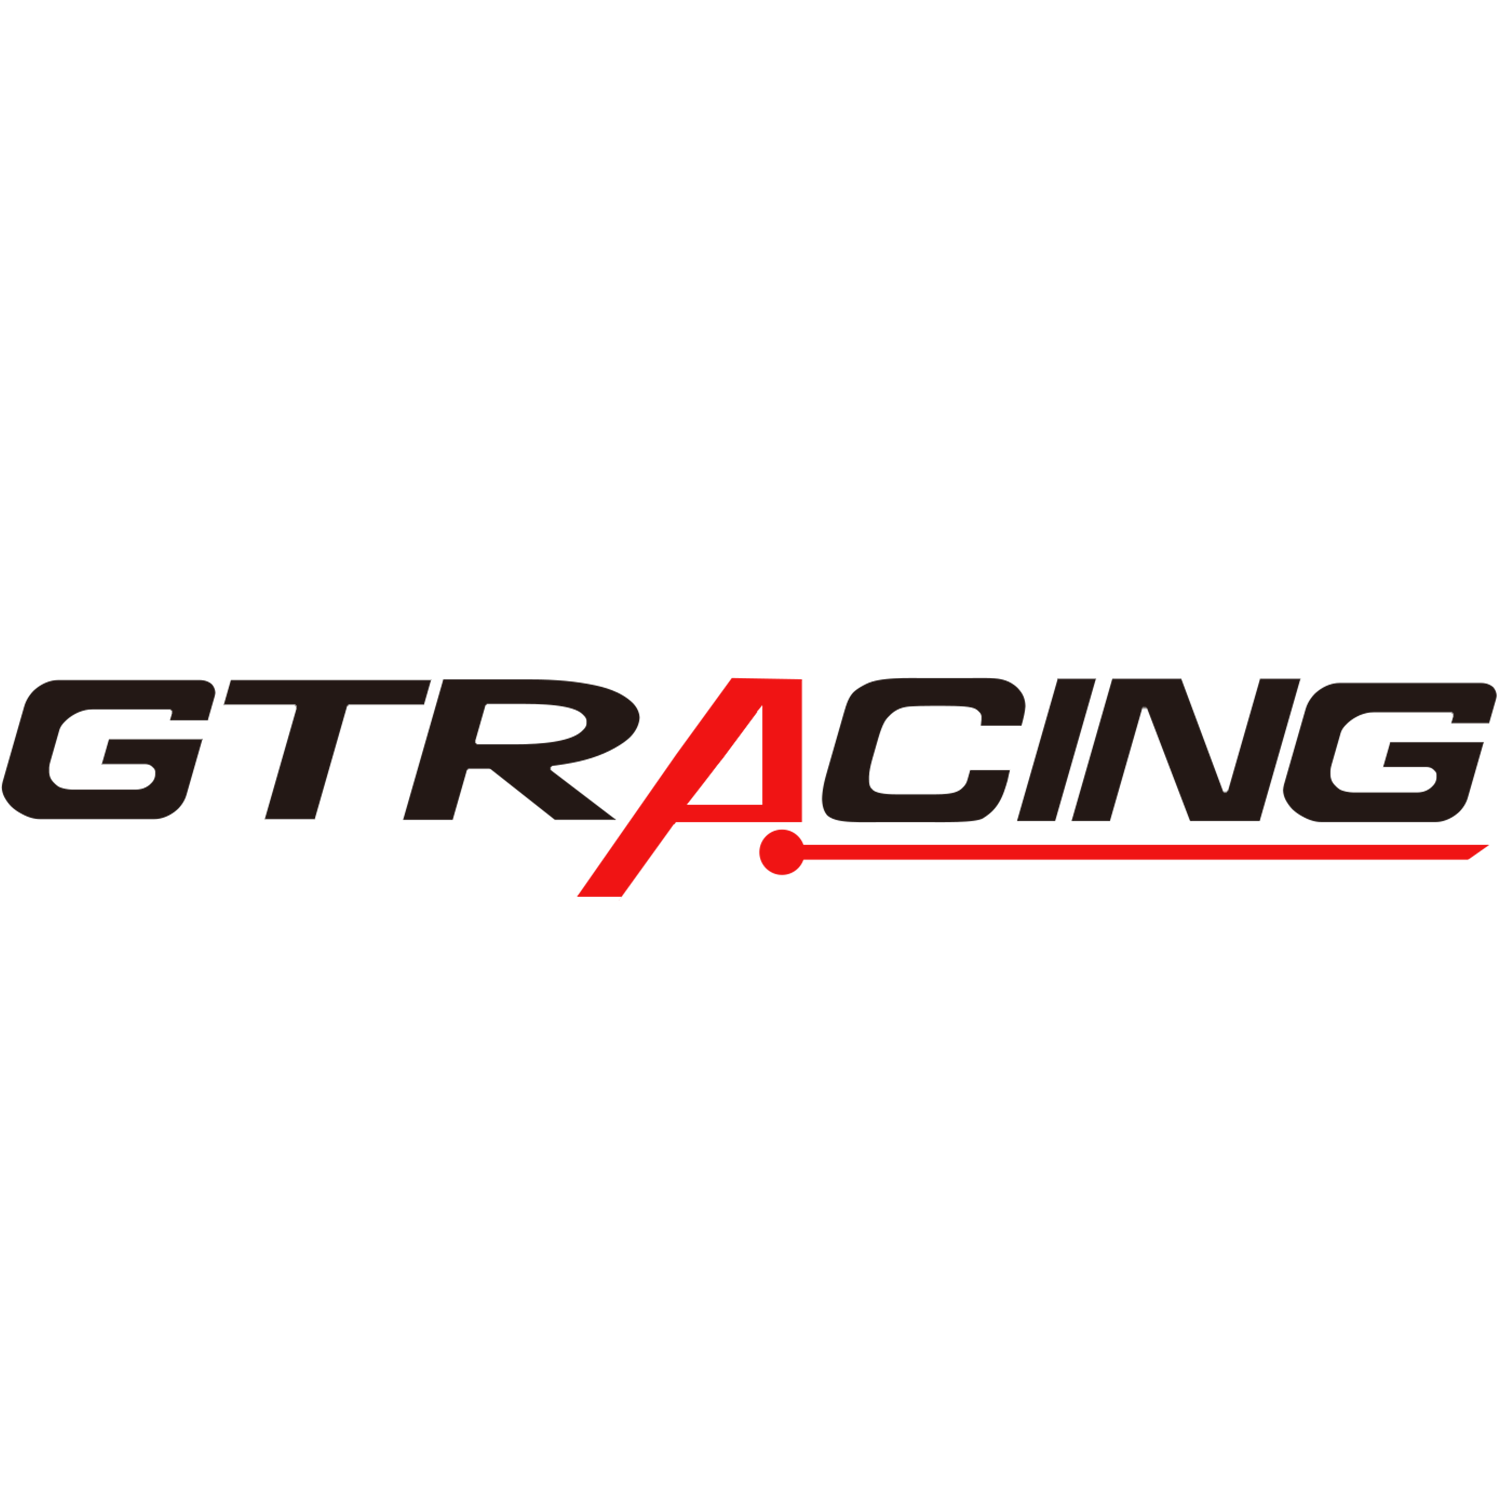 GTRacing coupons logo